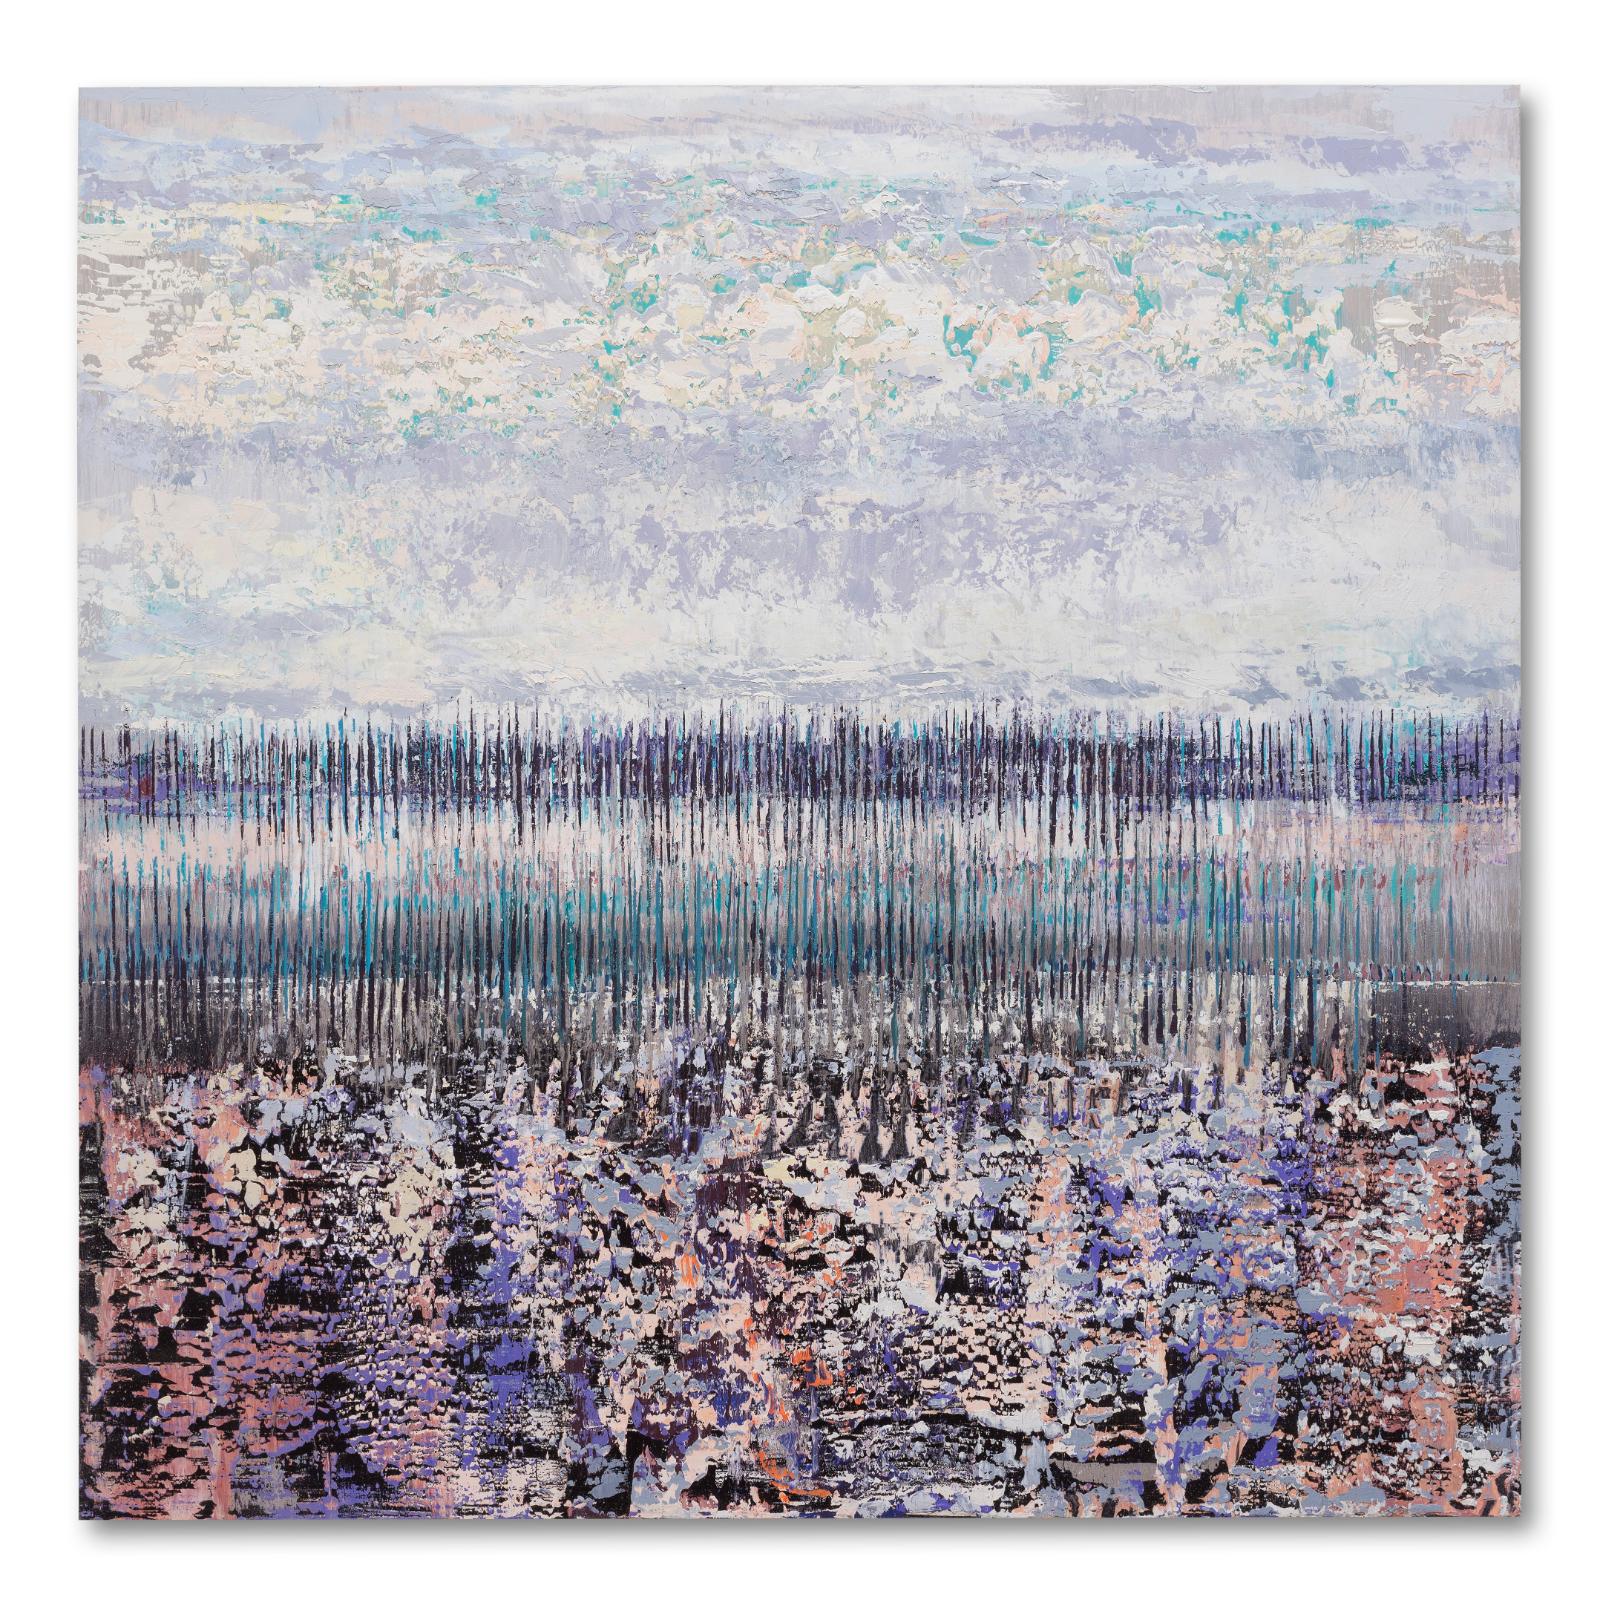 Bruno Kurz, Weite Himmel grau, 2019, Acryl und Öl auf Leinwand, 100 x 100 cm